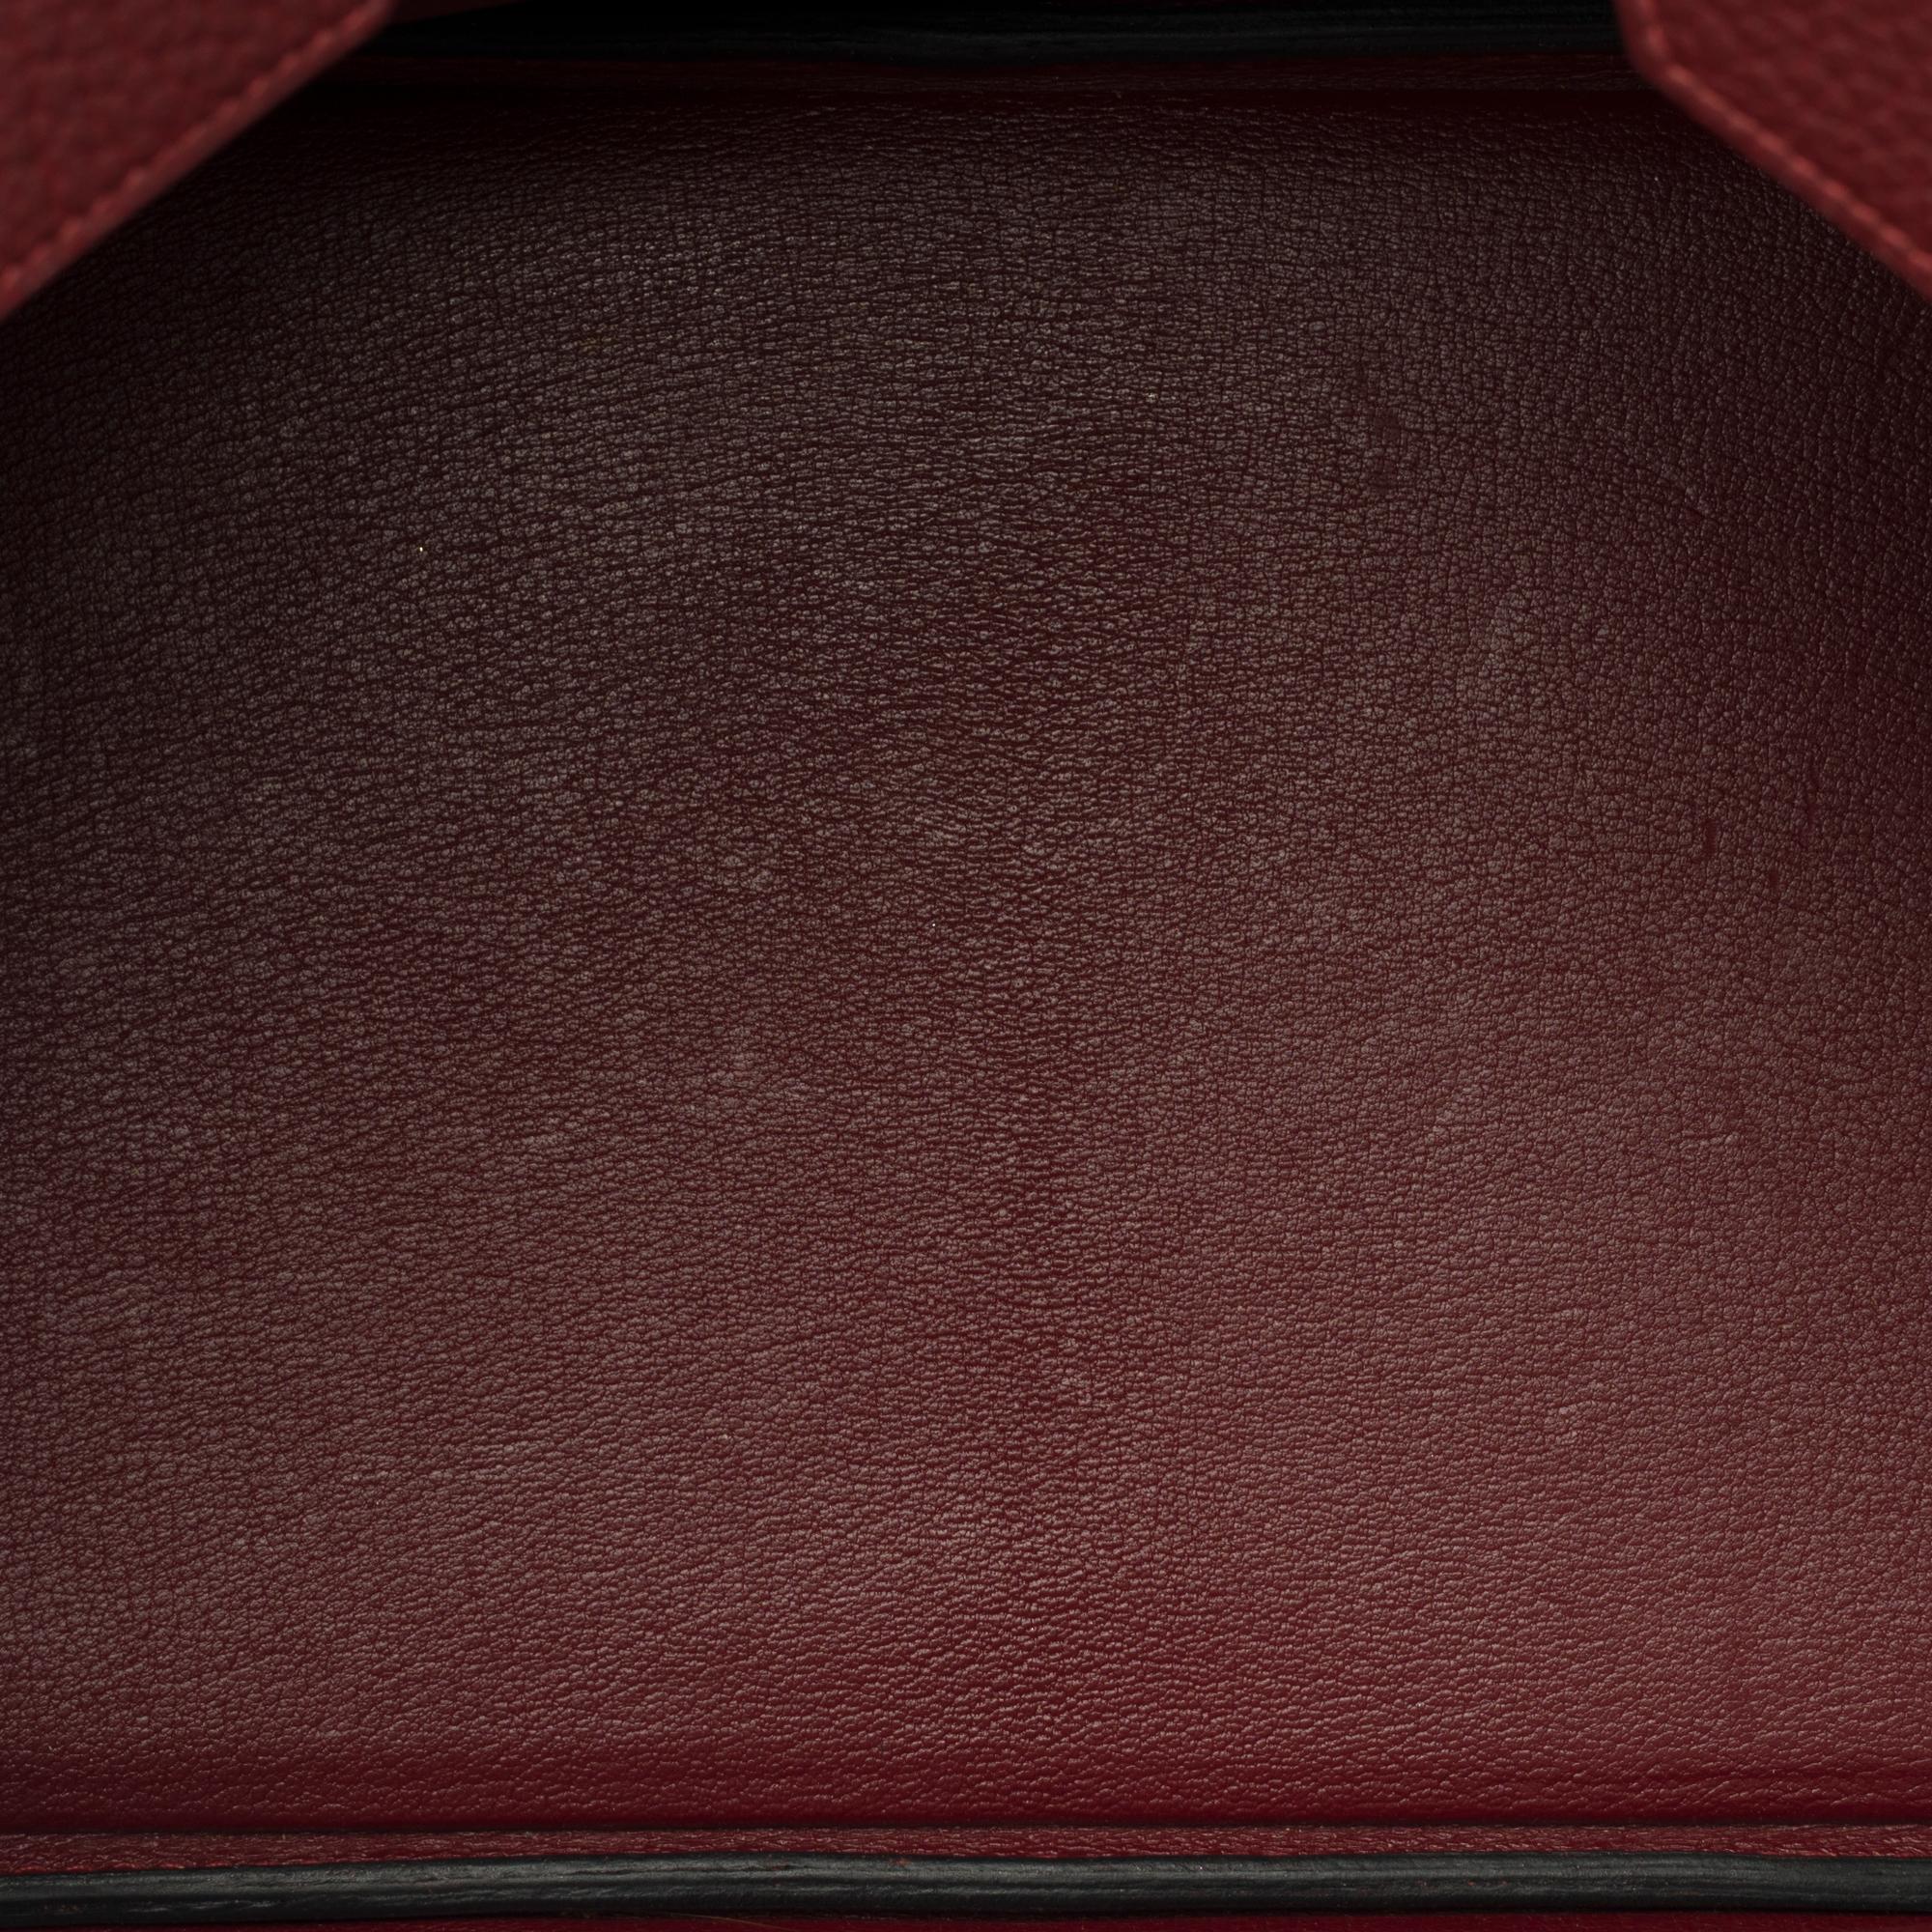 Stunning Hermes Birkin 40cm handbag in burgundy Fjord leather, silver hardware 2